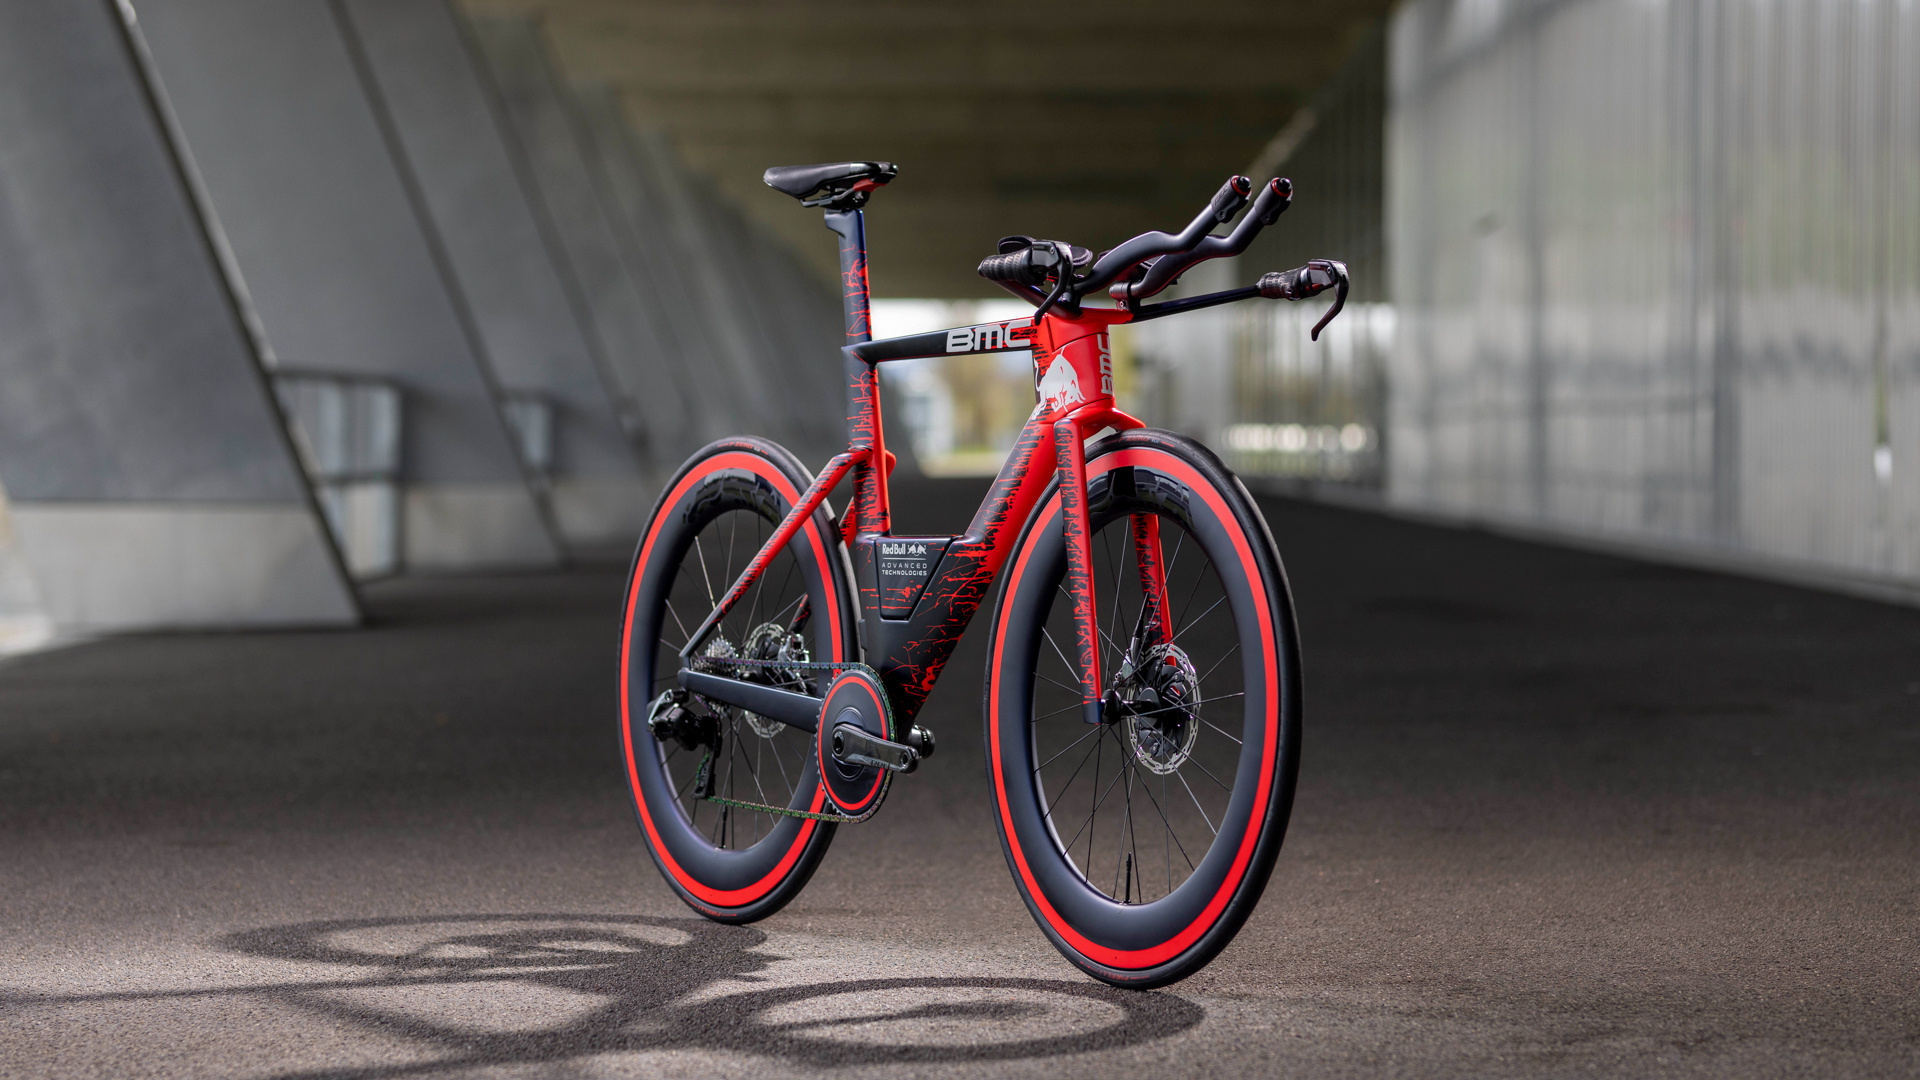 BMC Bikes, Redbull partnership, High-performance bicycles, 1920x1080 Full HD Desktop